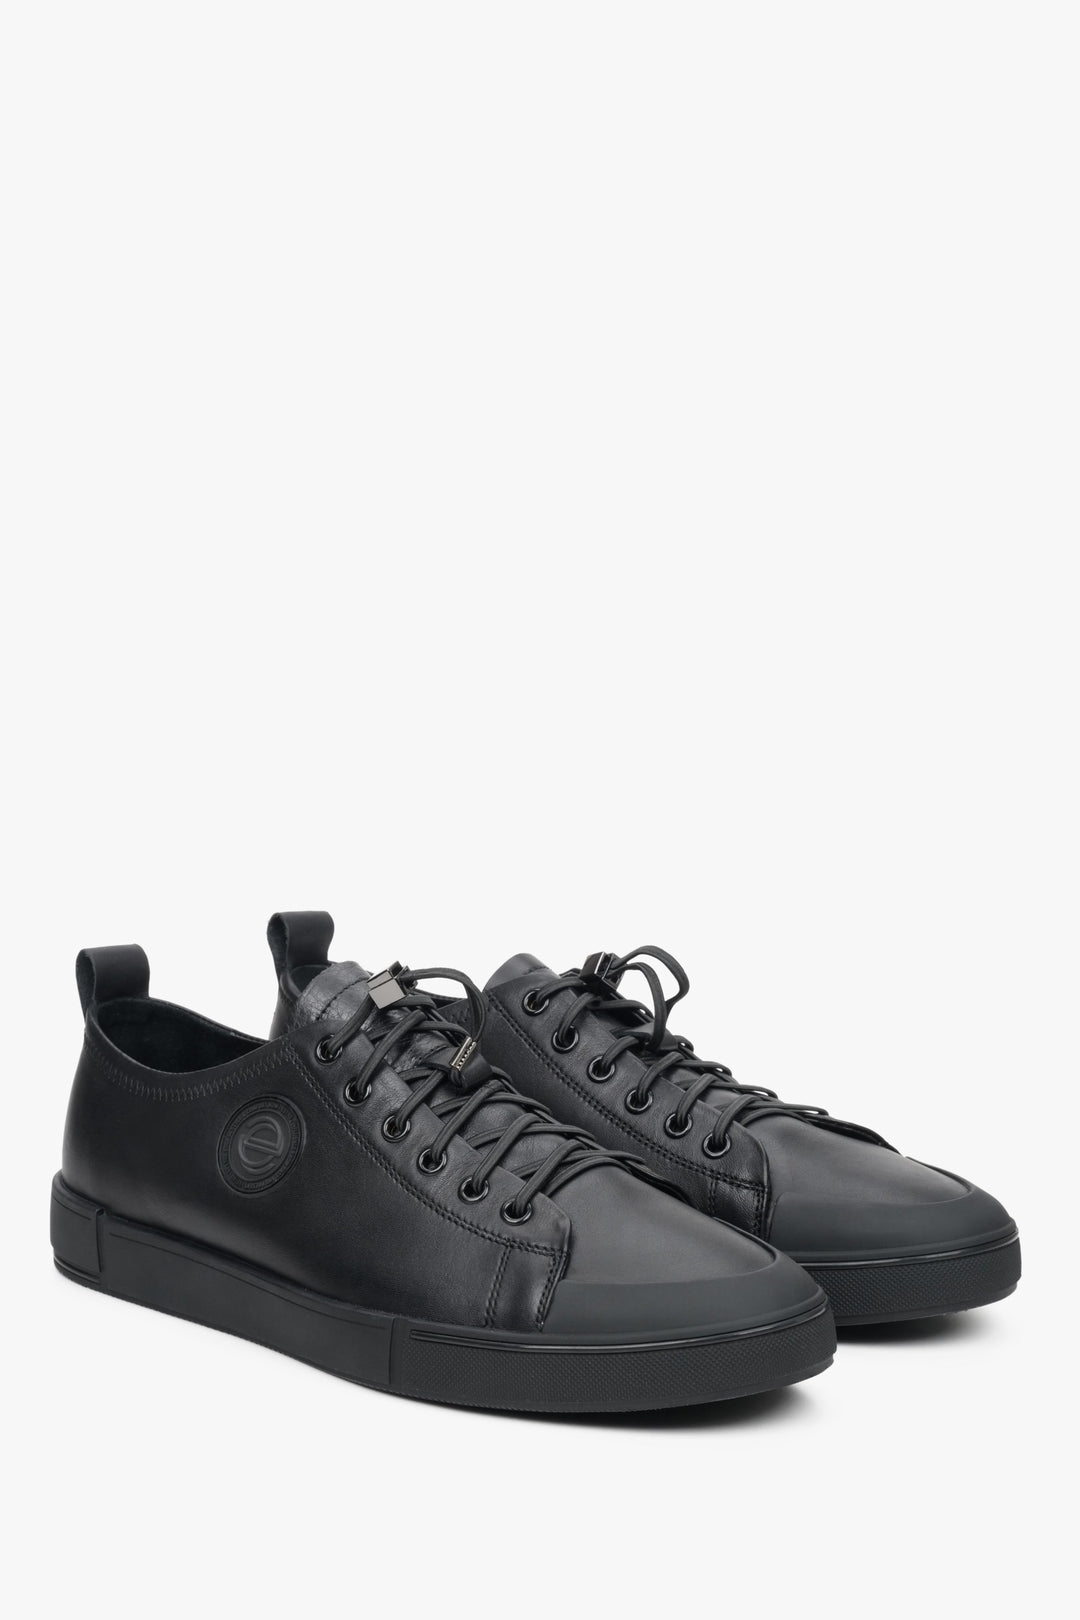 Estro men's sneakers in black leather.